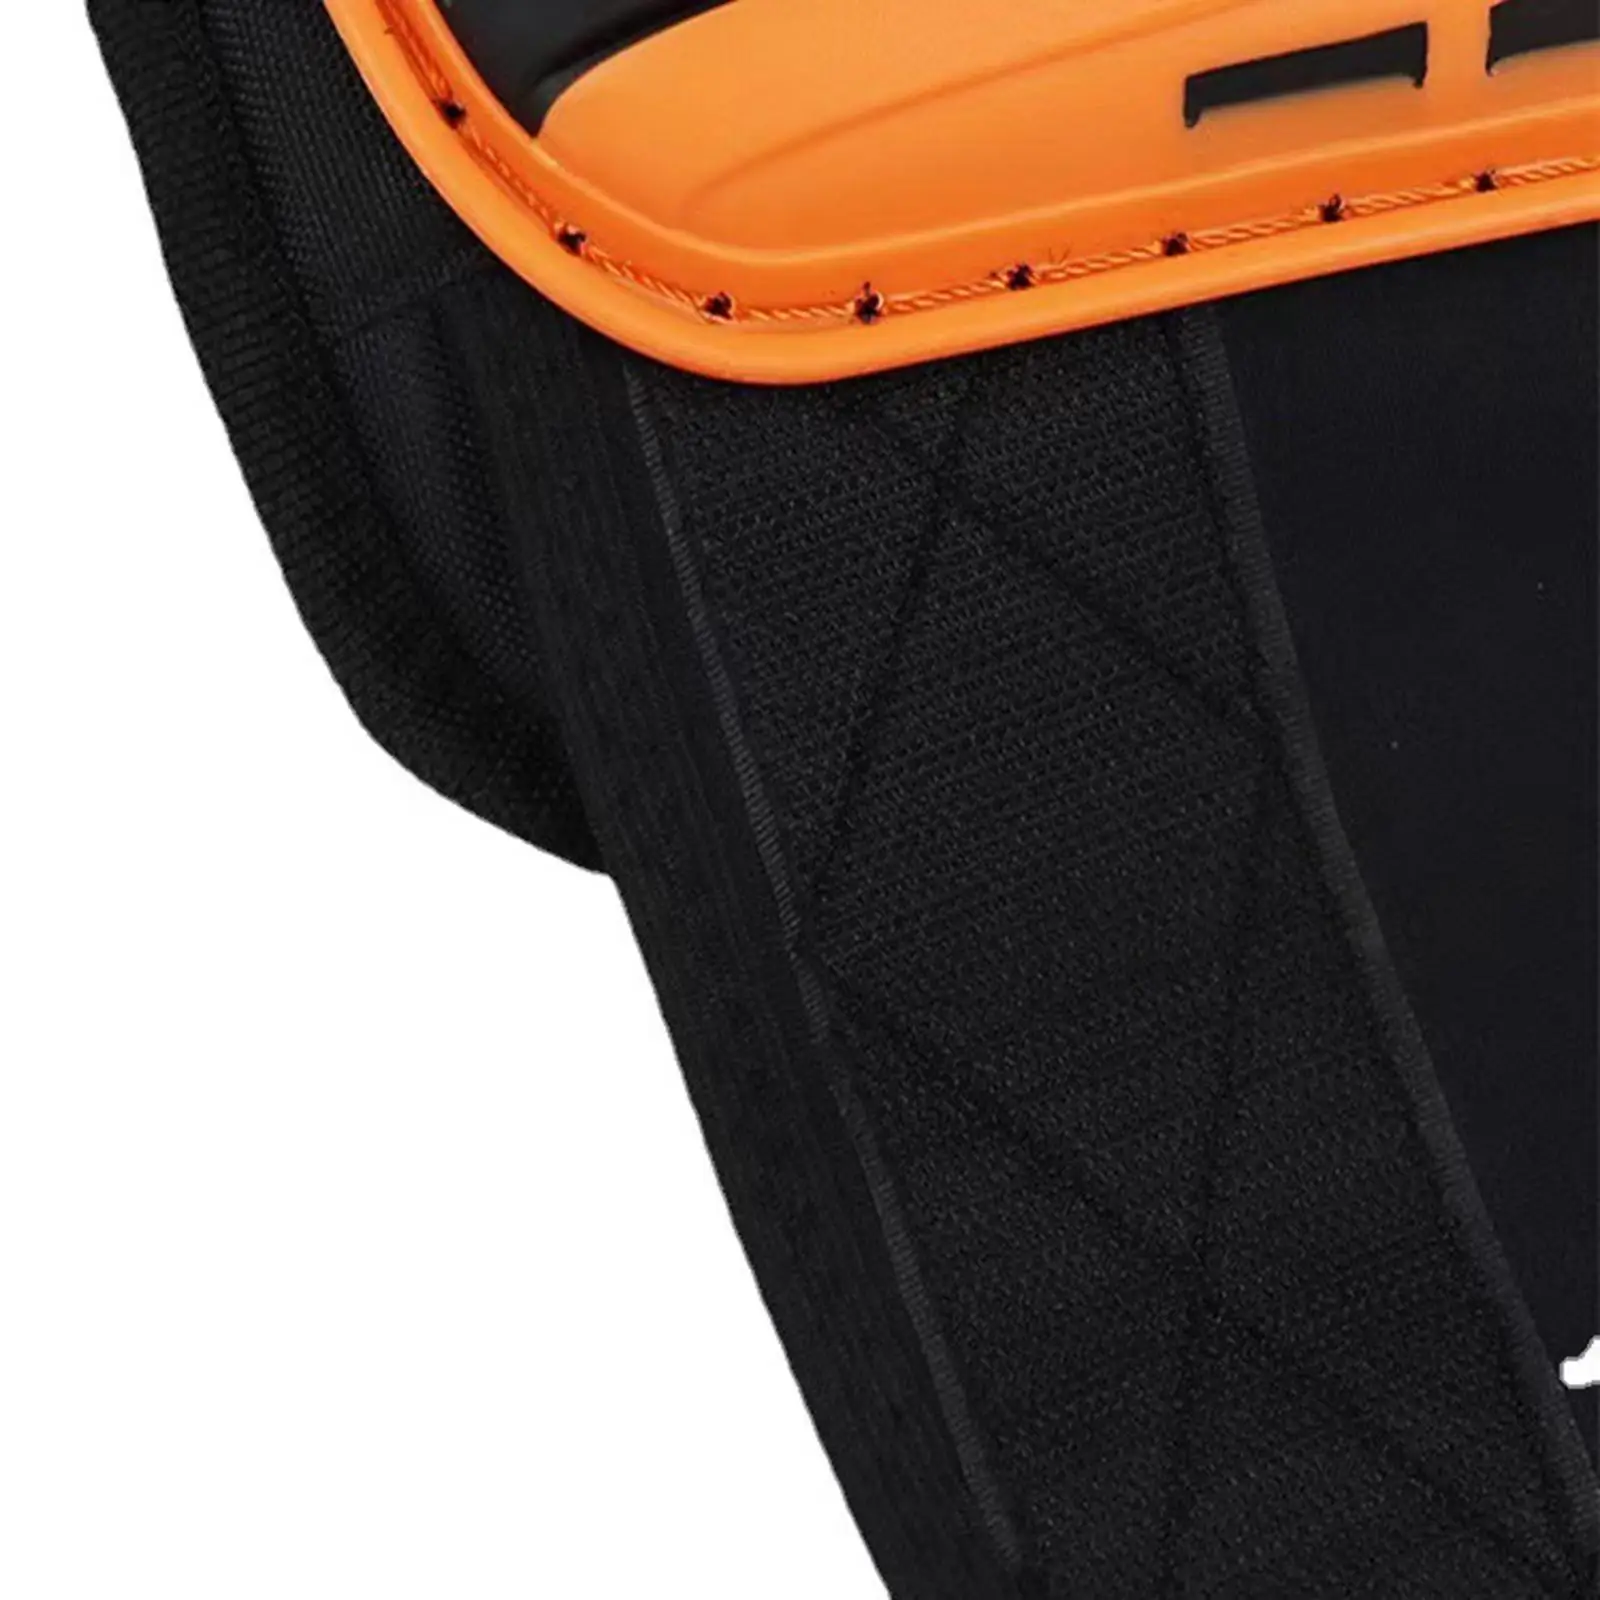 Knee Pad 1 Pair Protective Gear Anti-Slip Foam Knee Pads Work Knee Pads Durable for Skateboarding Hockey Outdoor Biking Sports